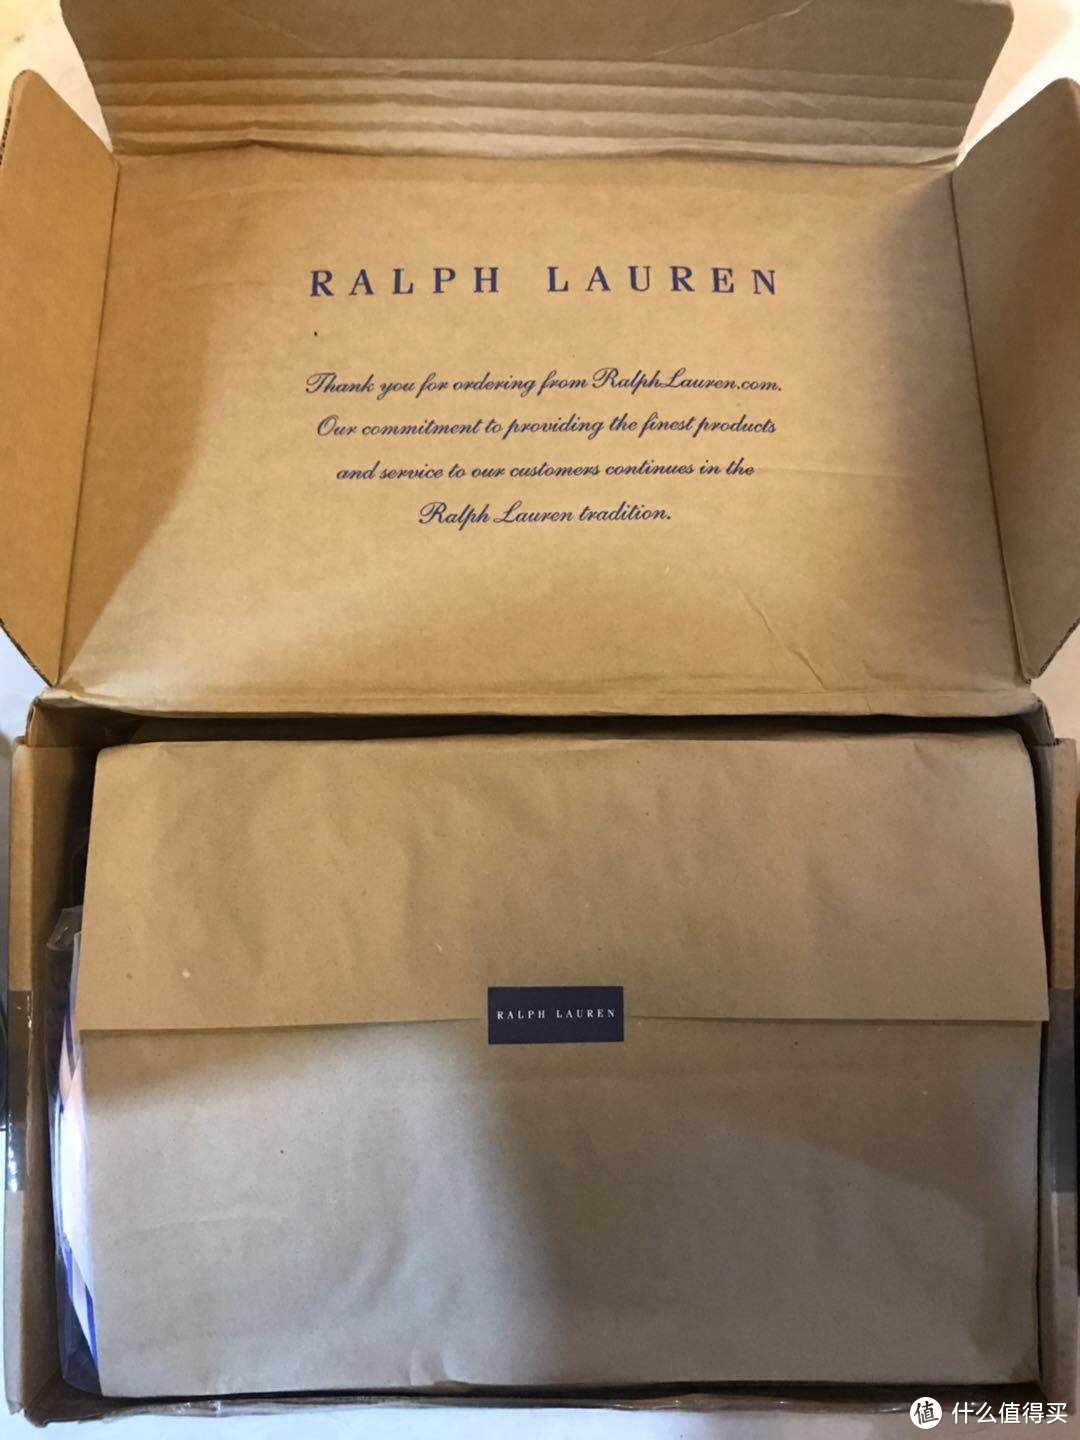 首单Ralph Lauren衬衫海淘，满意之旅